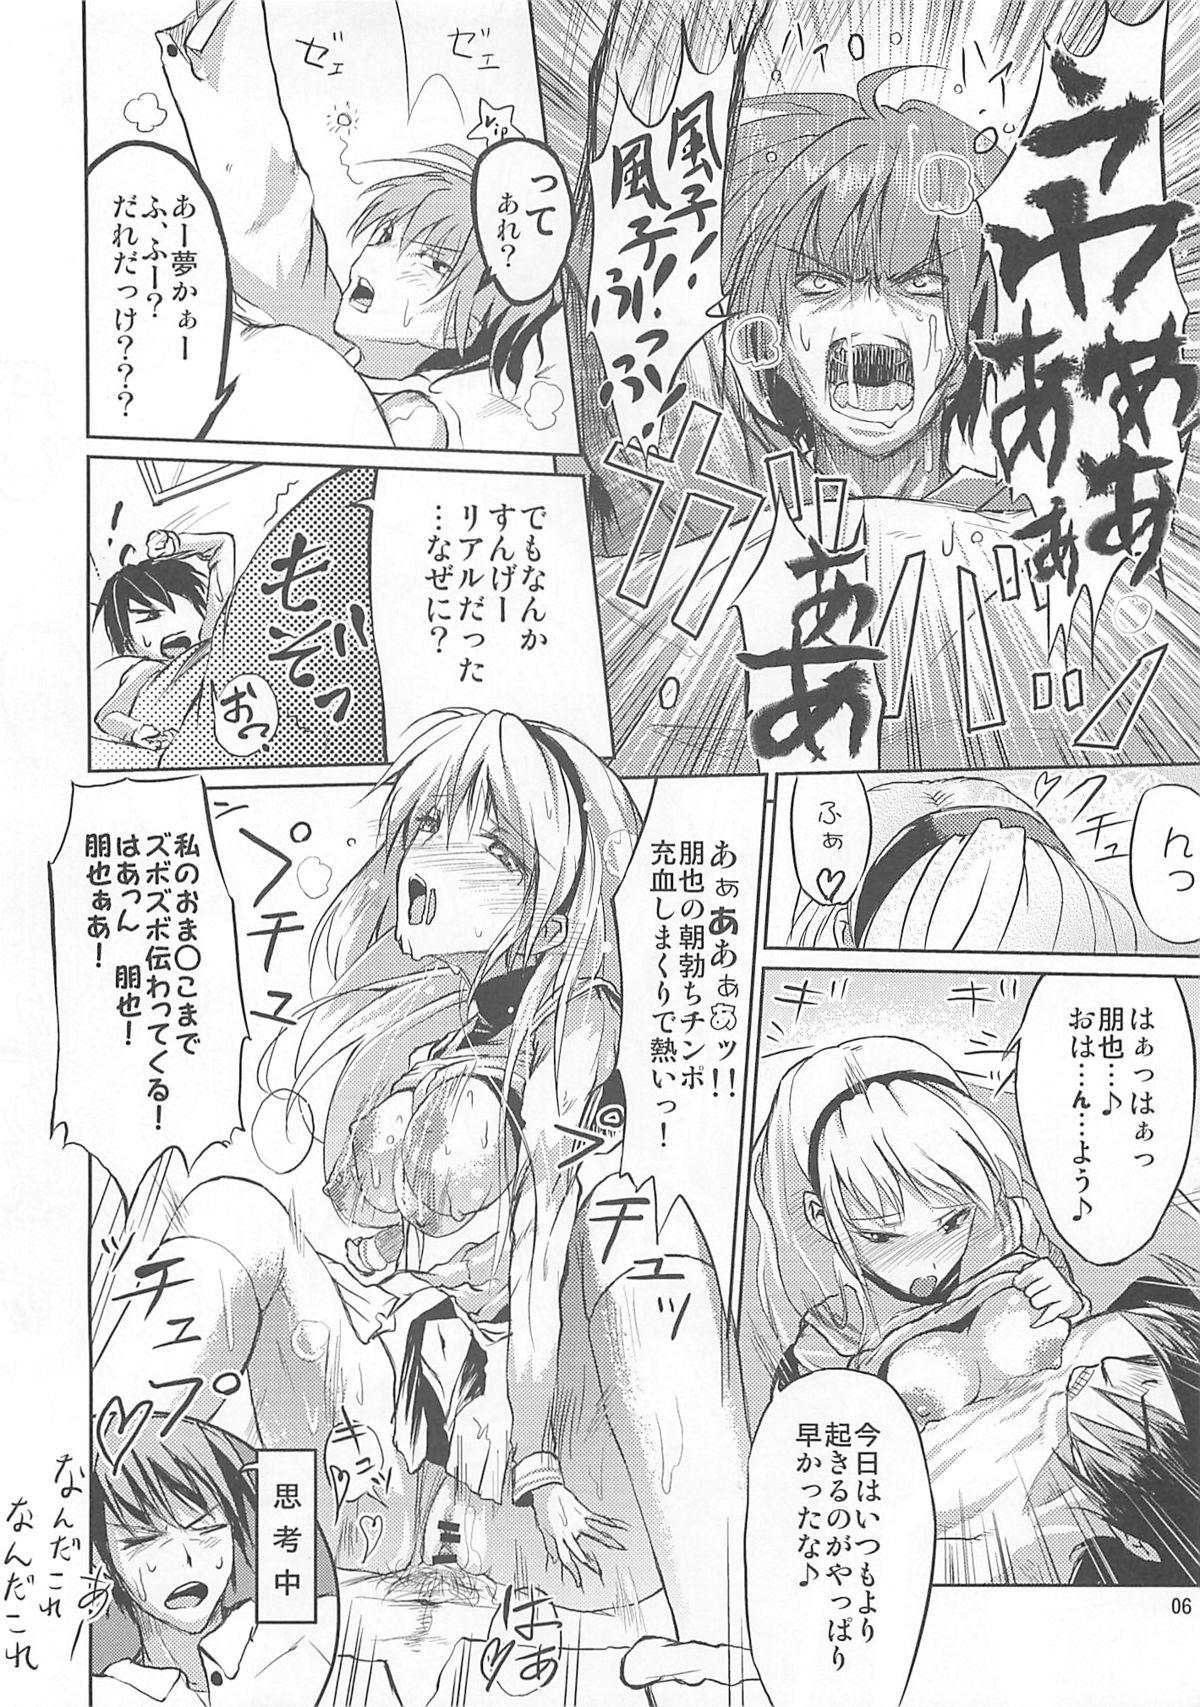 Socks Ashi no Kirei na T-san wa Shimari ga Ii - Clannad Butt - Page 6